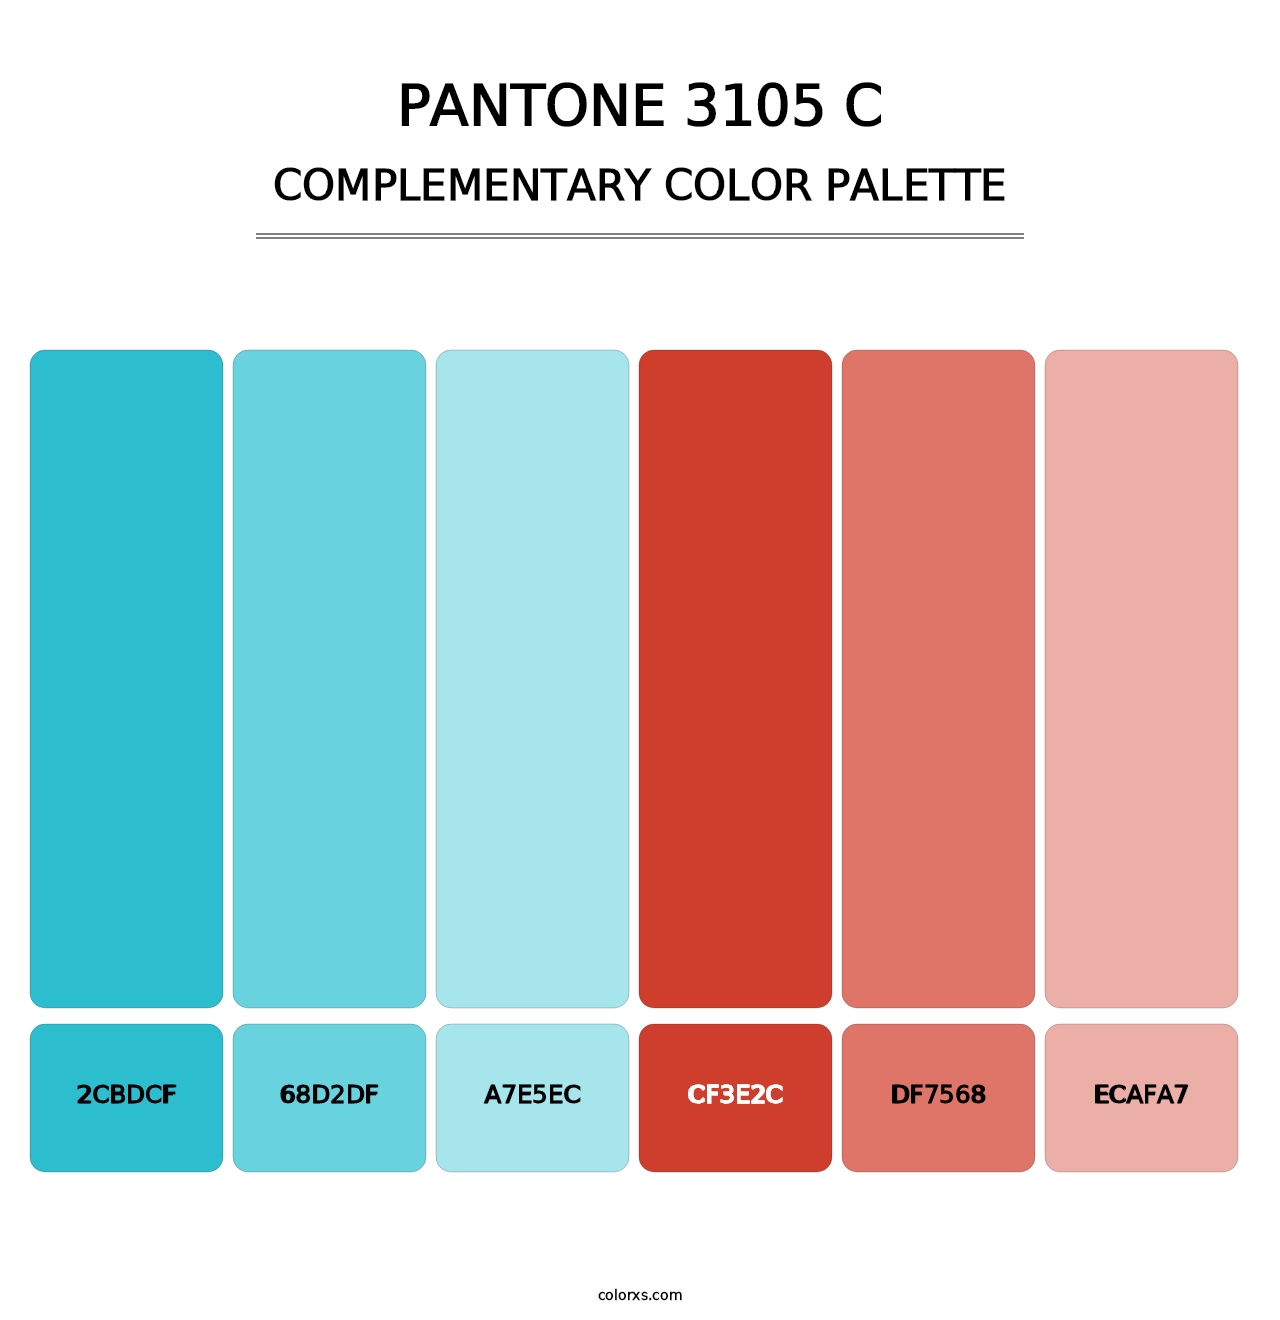 PANTONE 3105 C - Complementary Color Palette